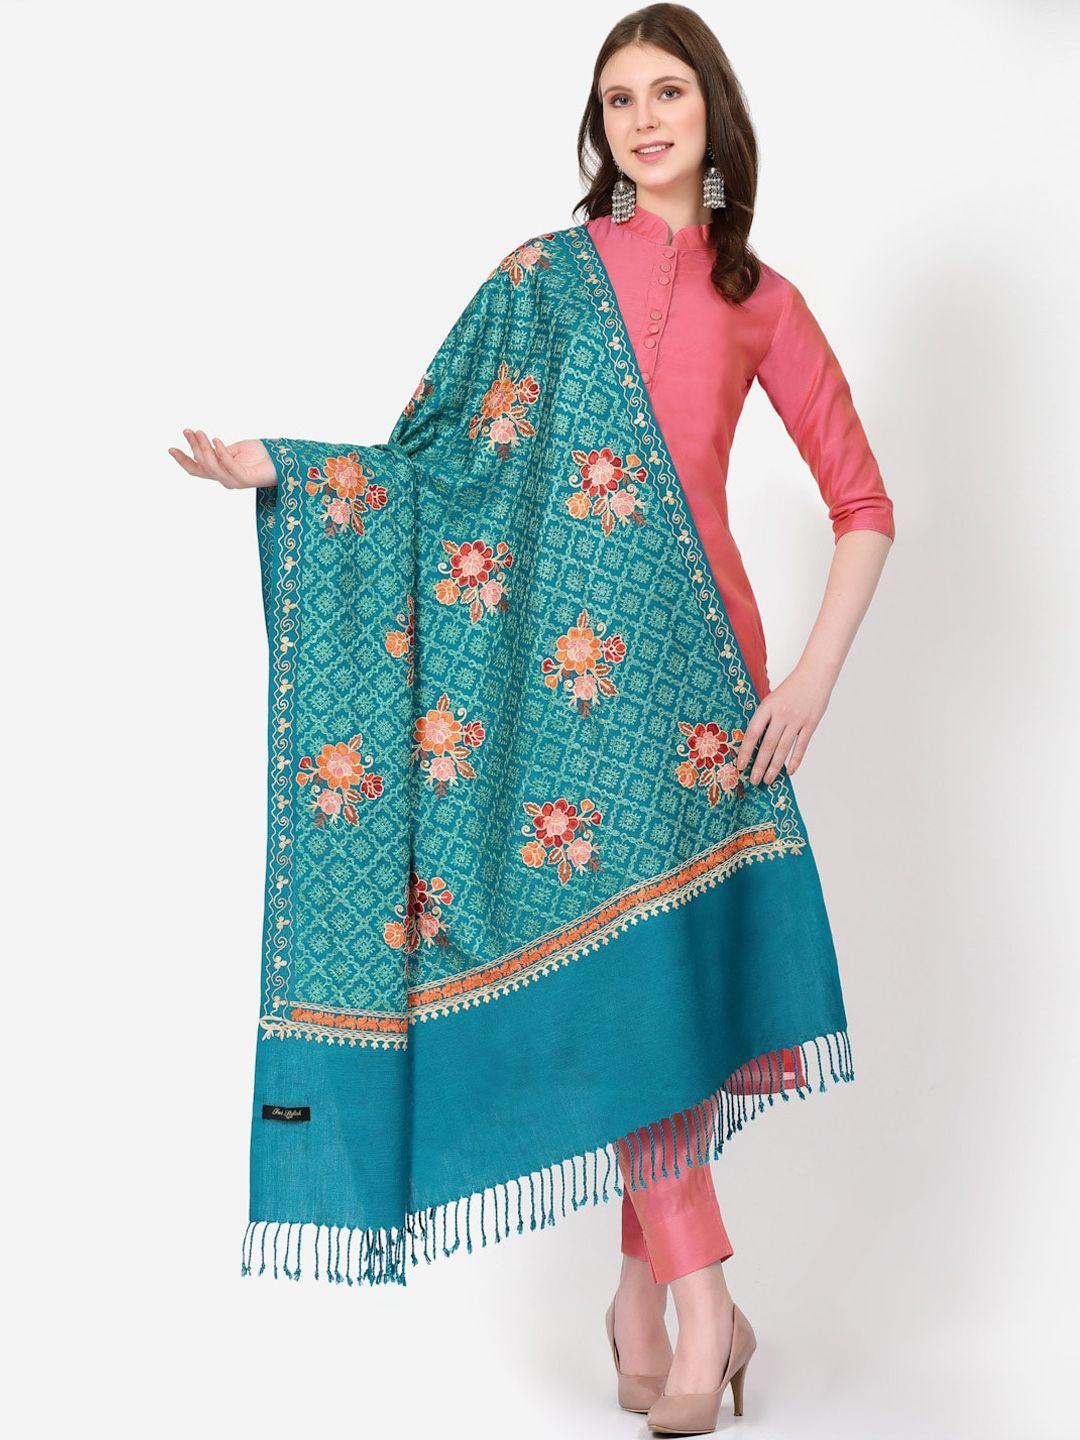 swi stylish floral embroidered shawl